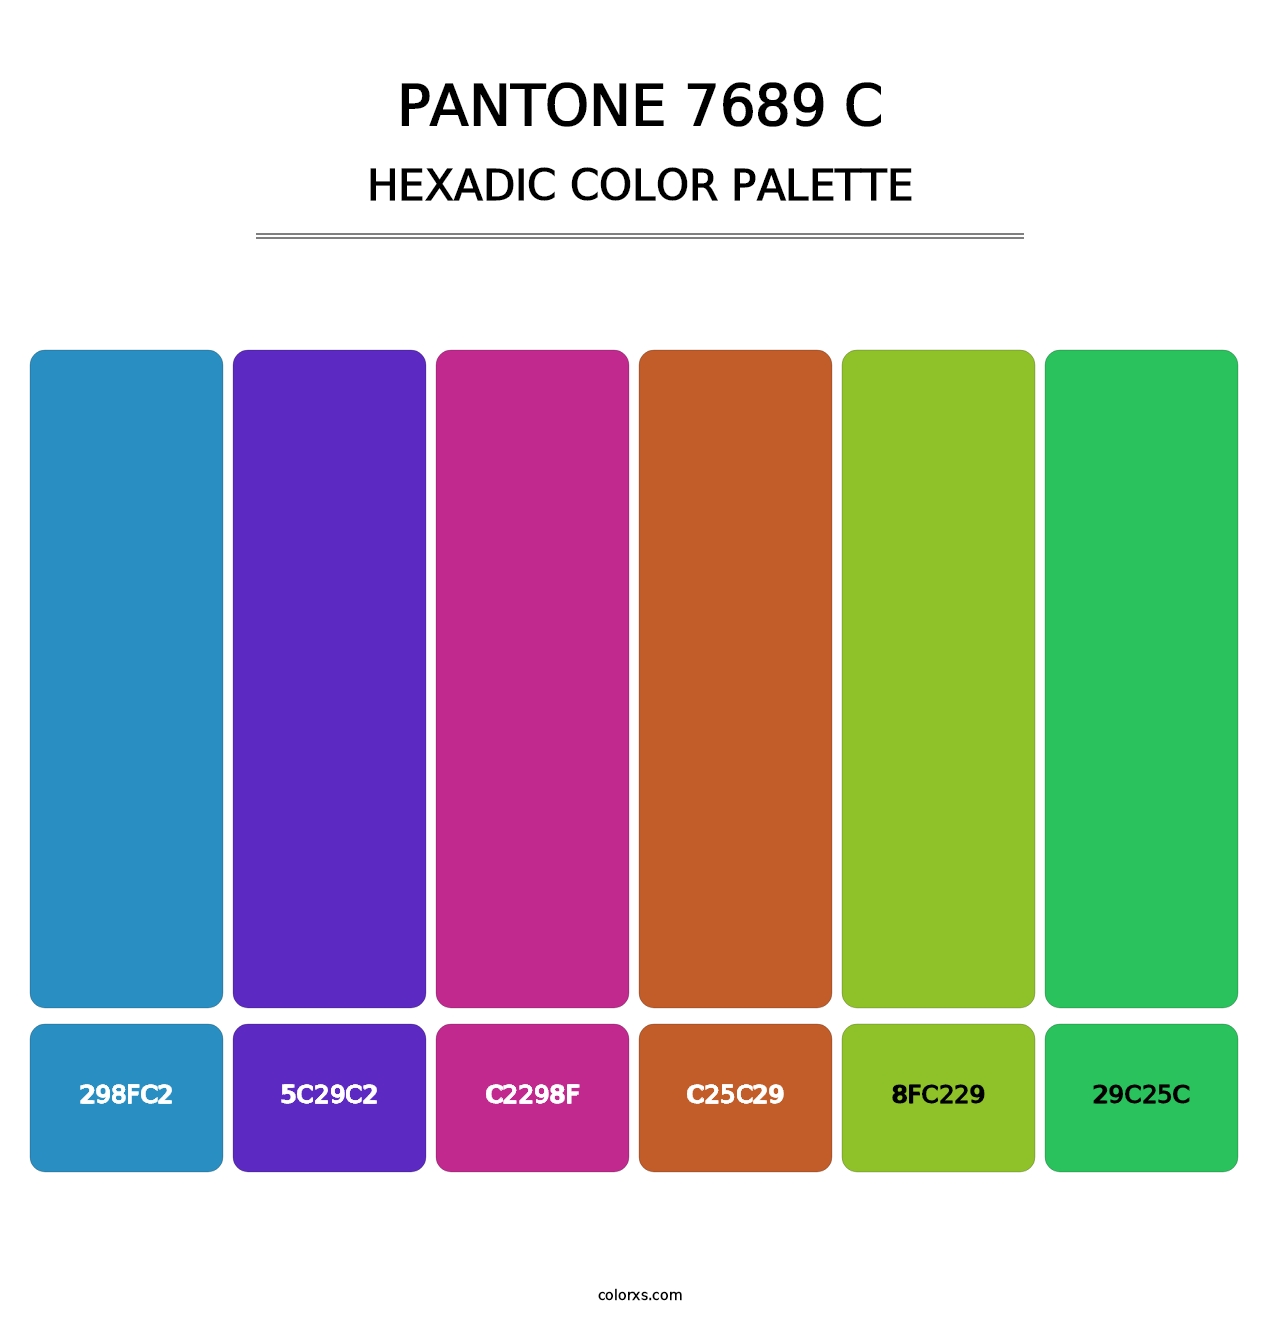 PANTONE 7689 C - Hexadic Color Palette